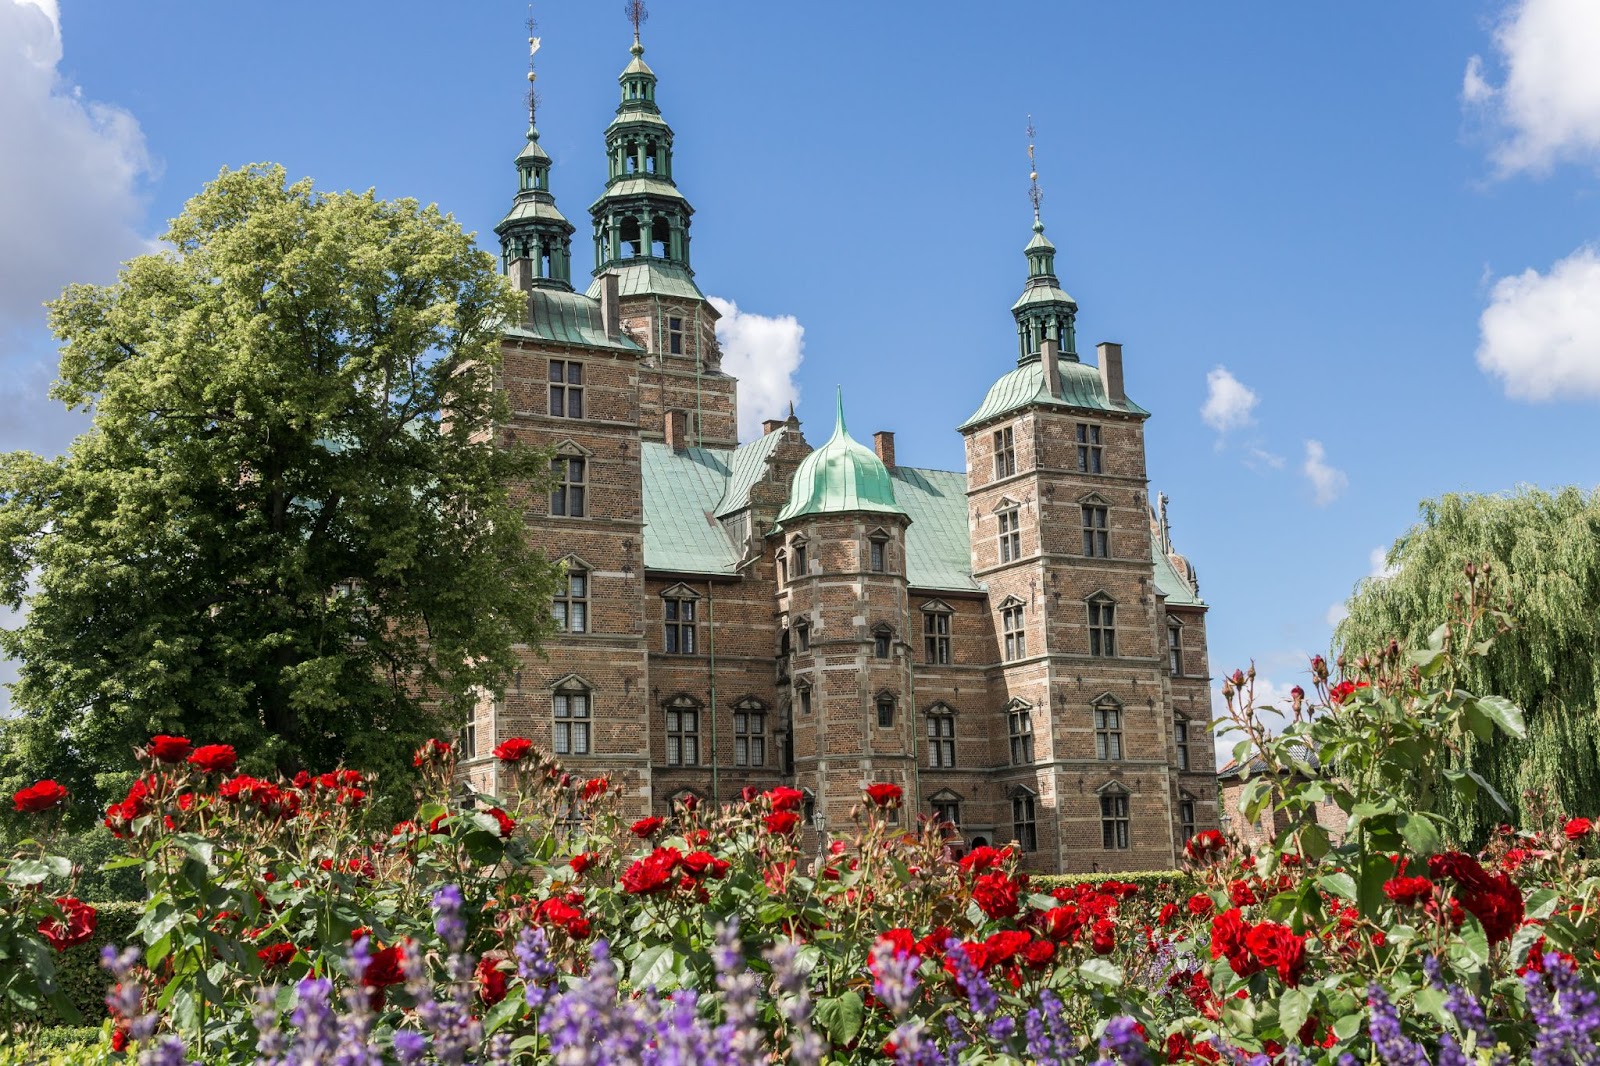 Rosenborg Castle in the King’s Garden bookonboard things to doin copenhagen